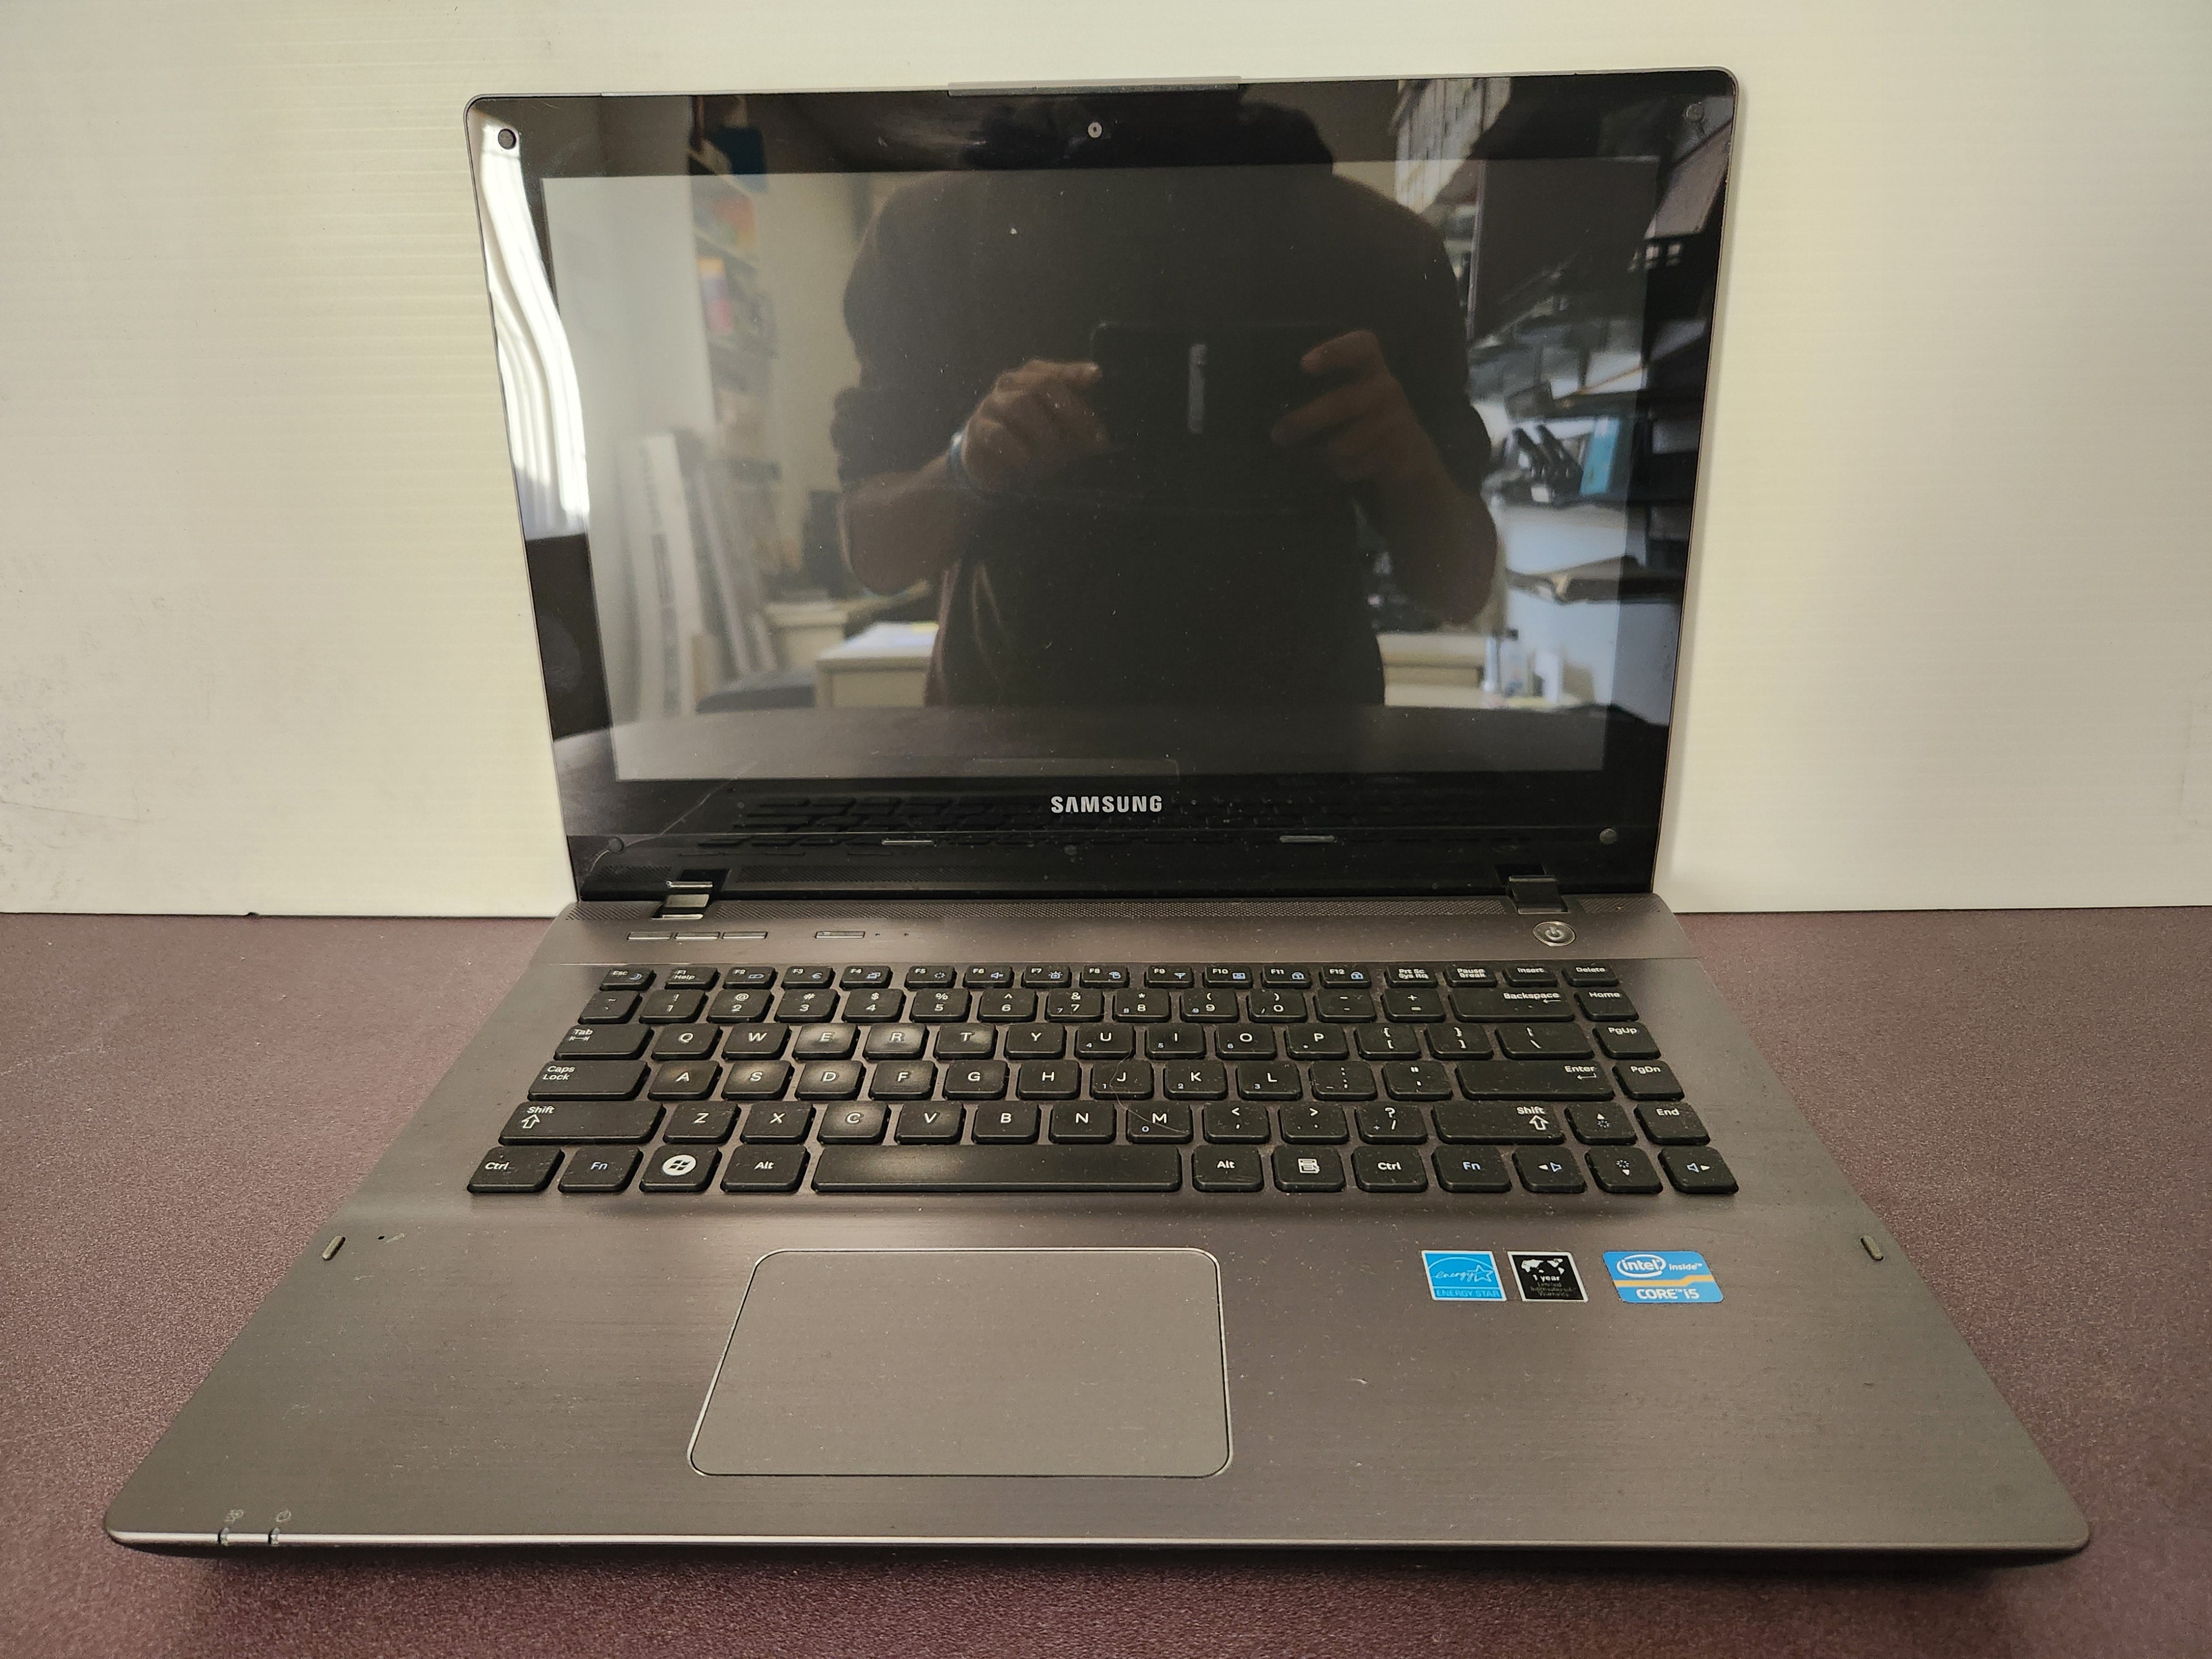 Samsung QX411 - Refurbished Laptop